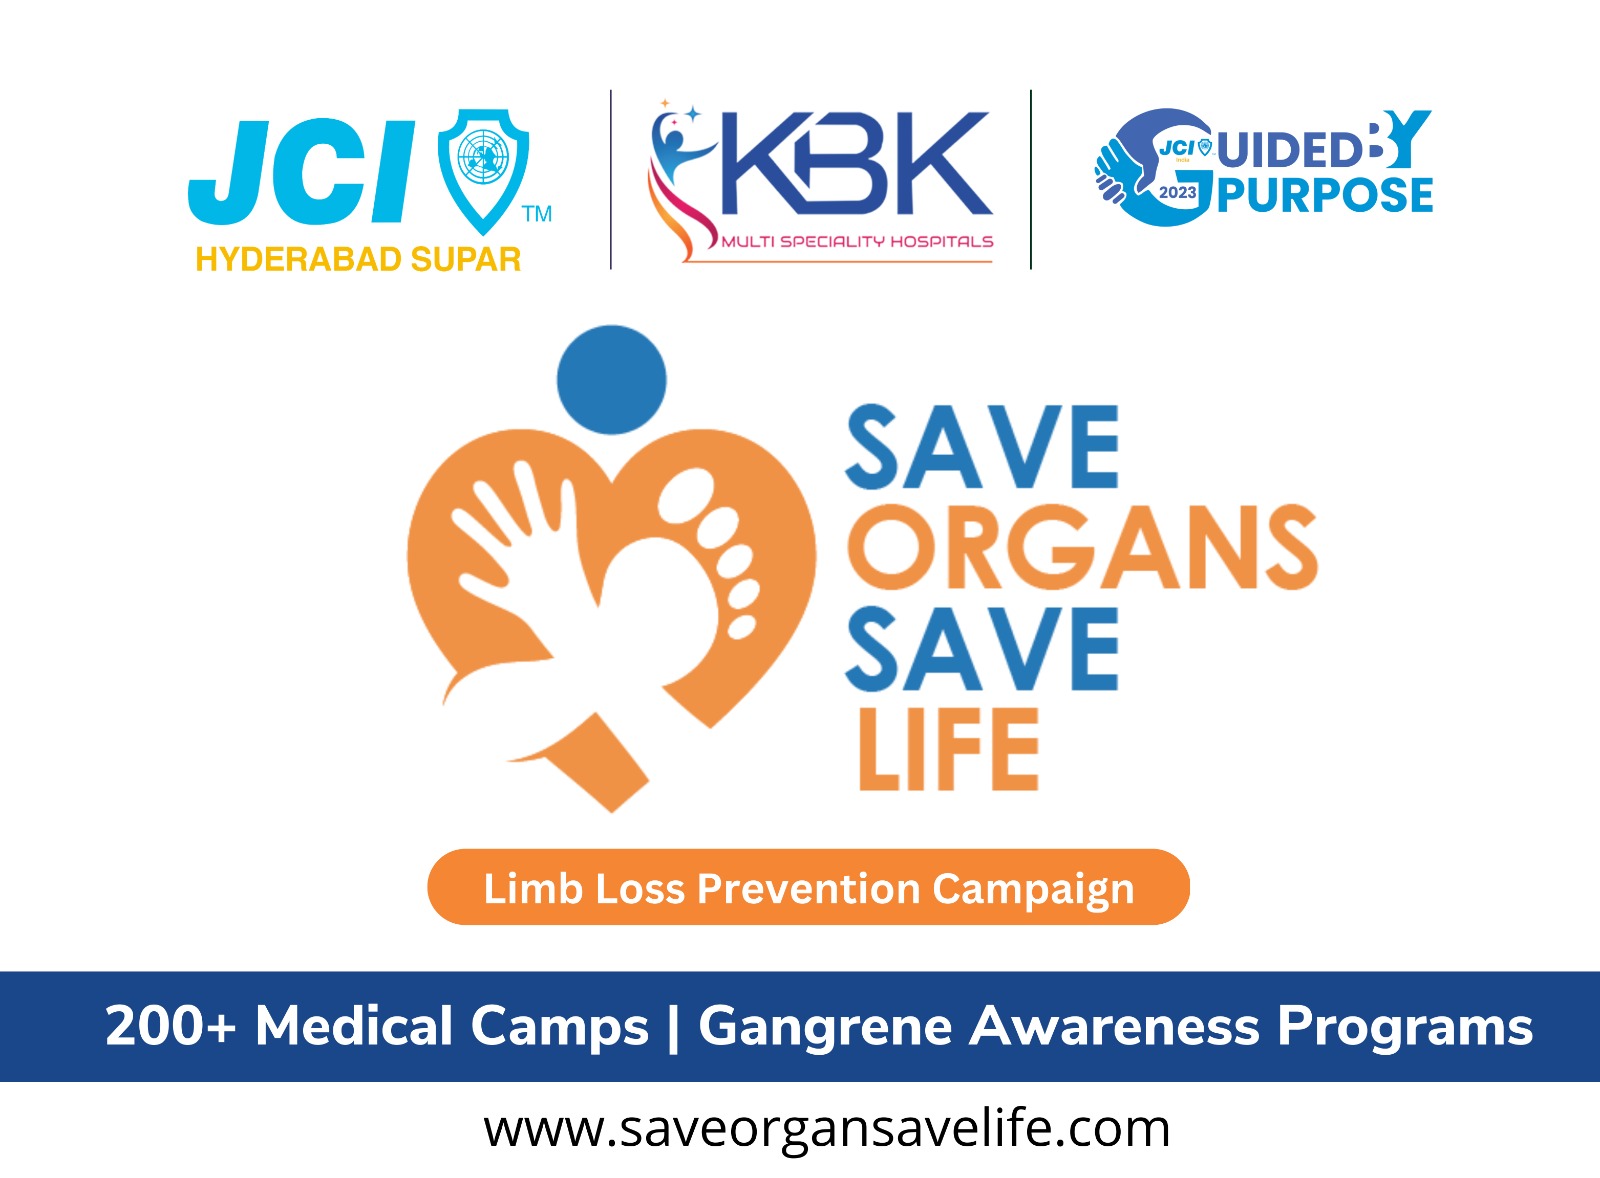 Save Organs, Save Life